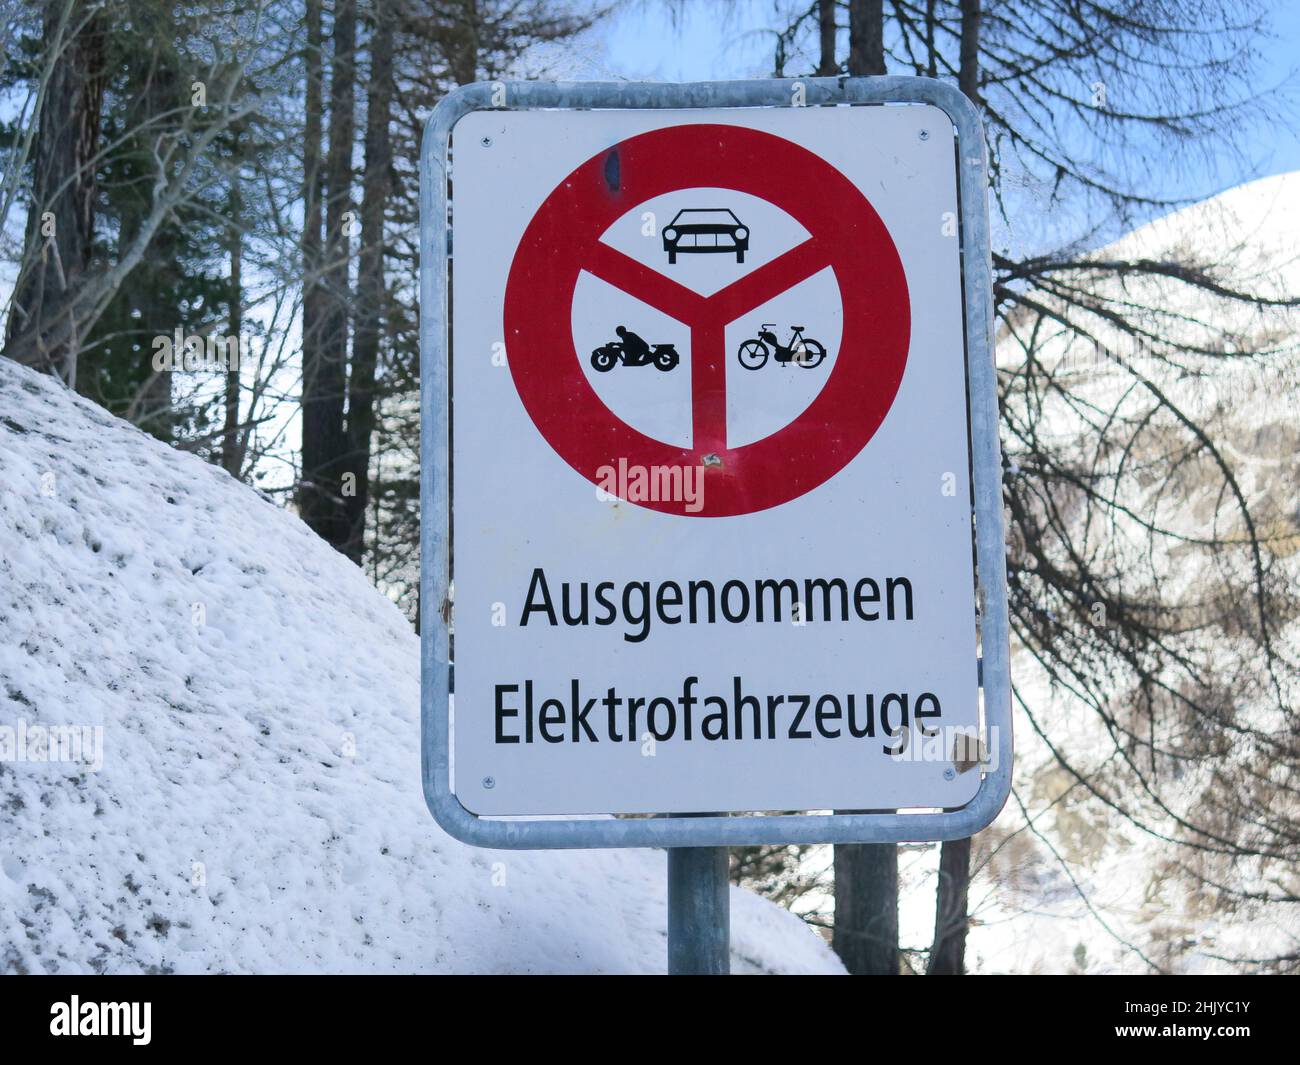 Fahrverbot Fahrzeuge außer Elektrofahrzeuge, Zermatt, Wallis, Schweiz Foto de stock